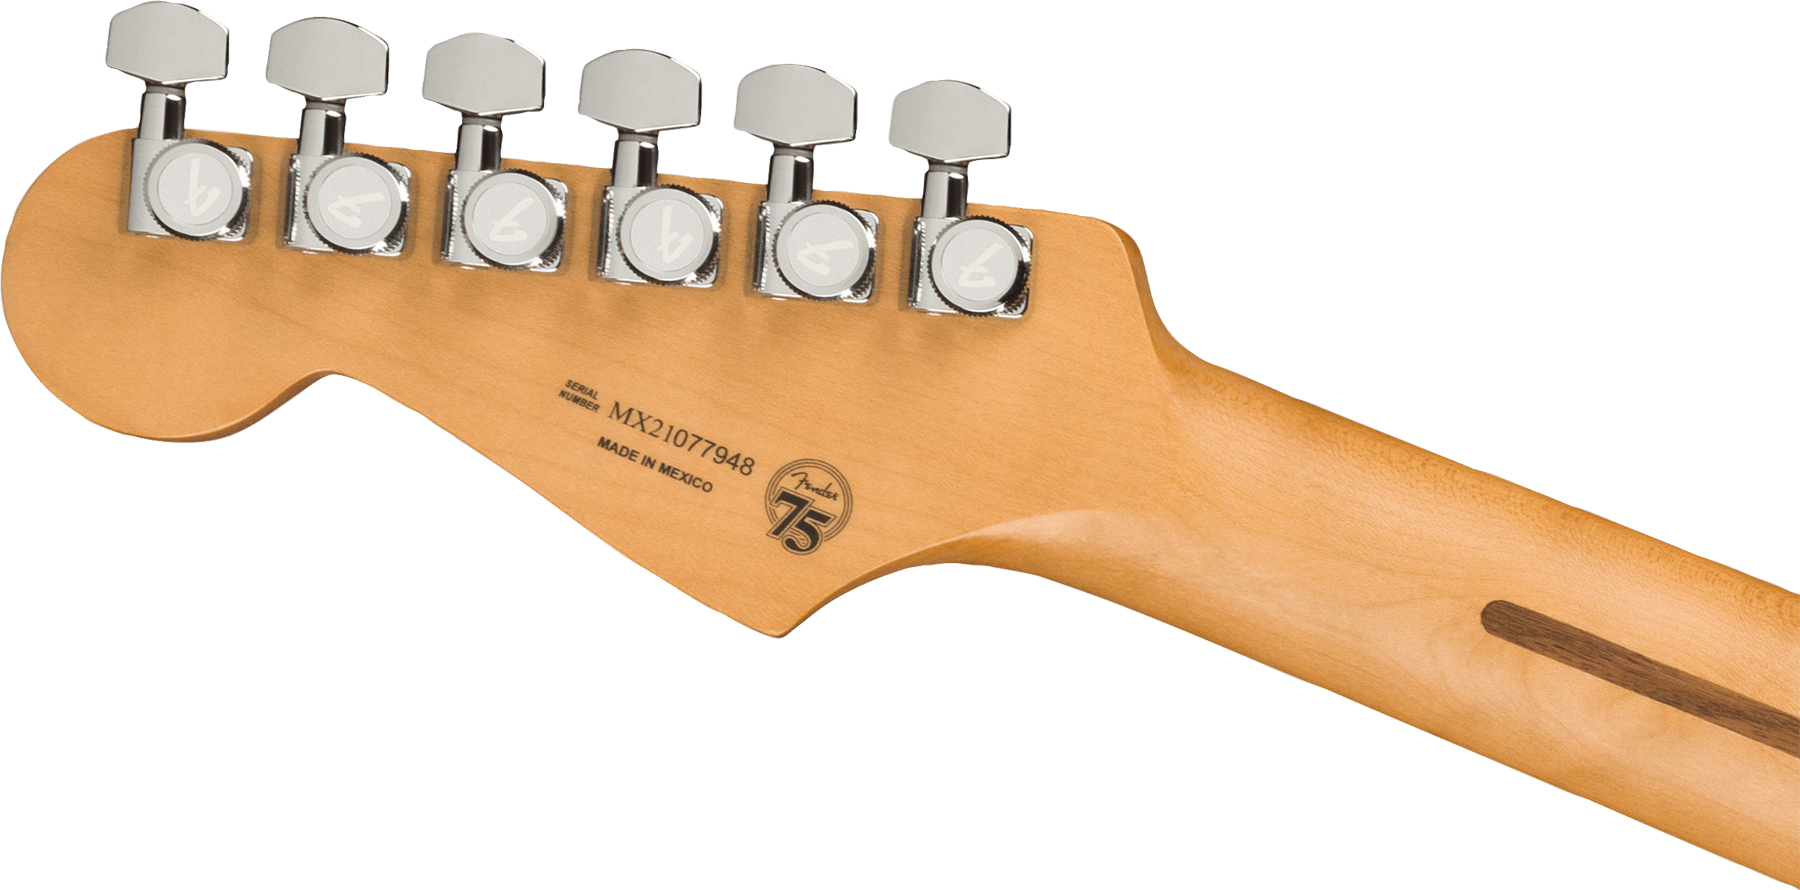 Fender Strat Player Plus Mex 3s Trem Mn - Olympic Pearl - Str shape electric guitar - Variation 3